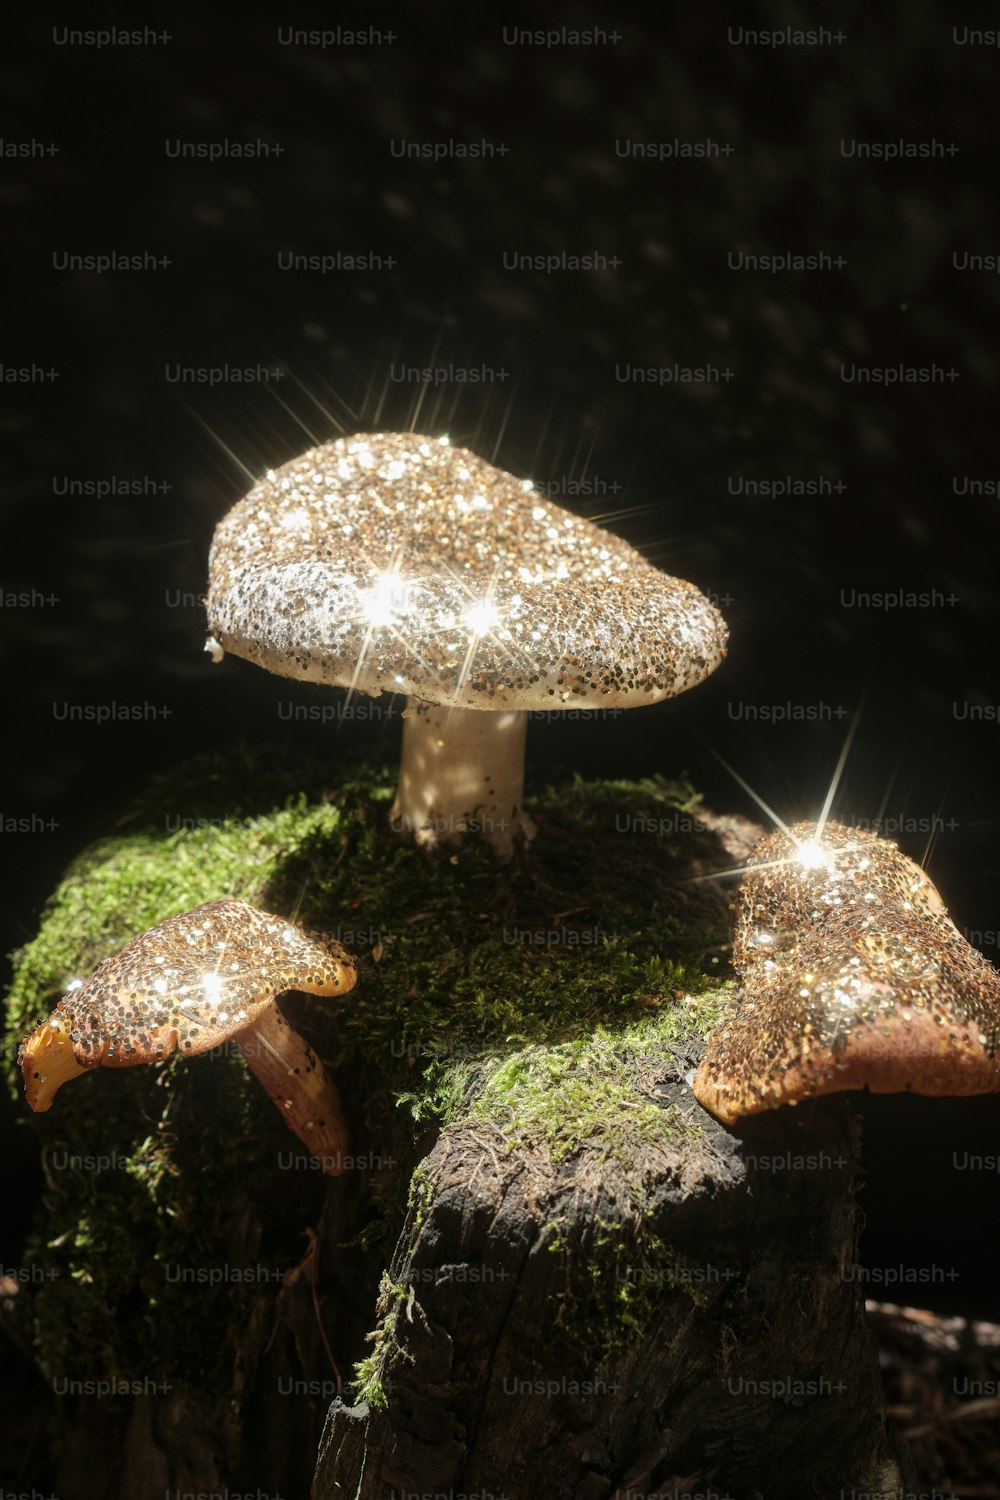 Un grupo de hongos sentados encima de un tocón de árbol cubierto de musgo